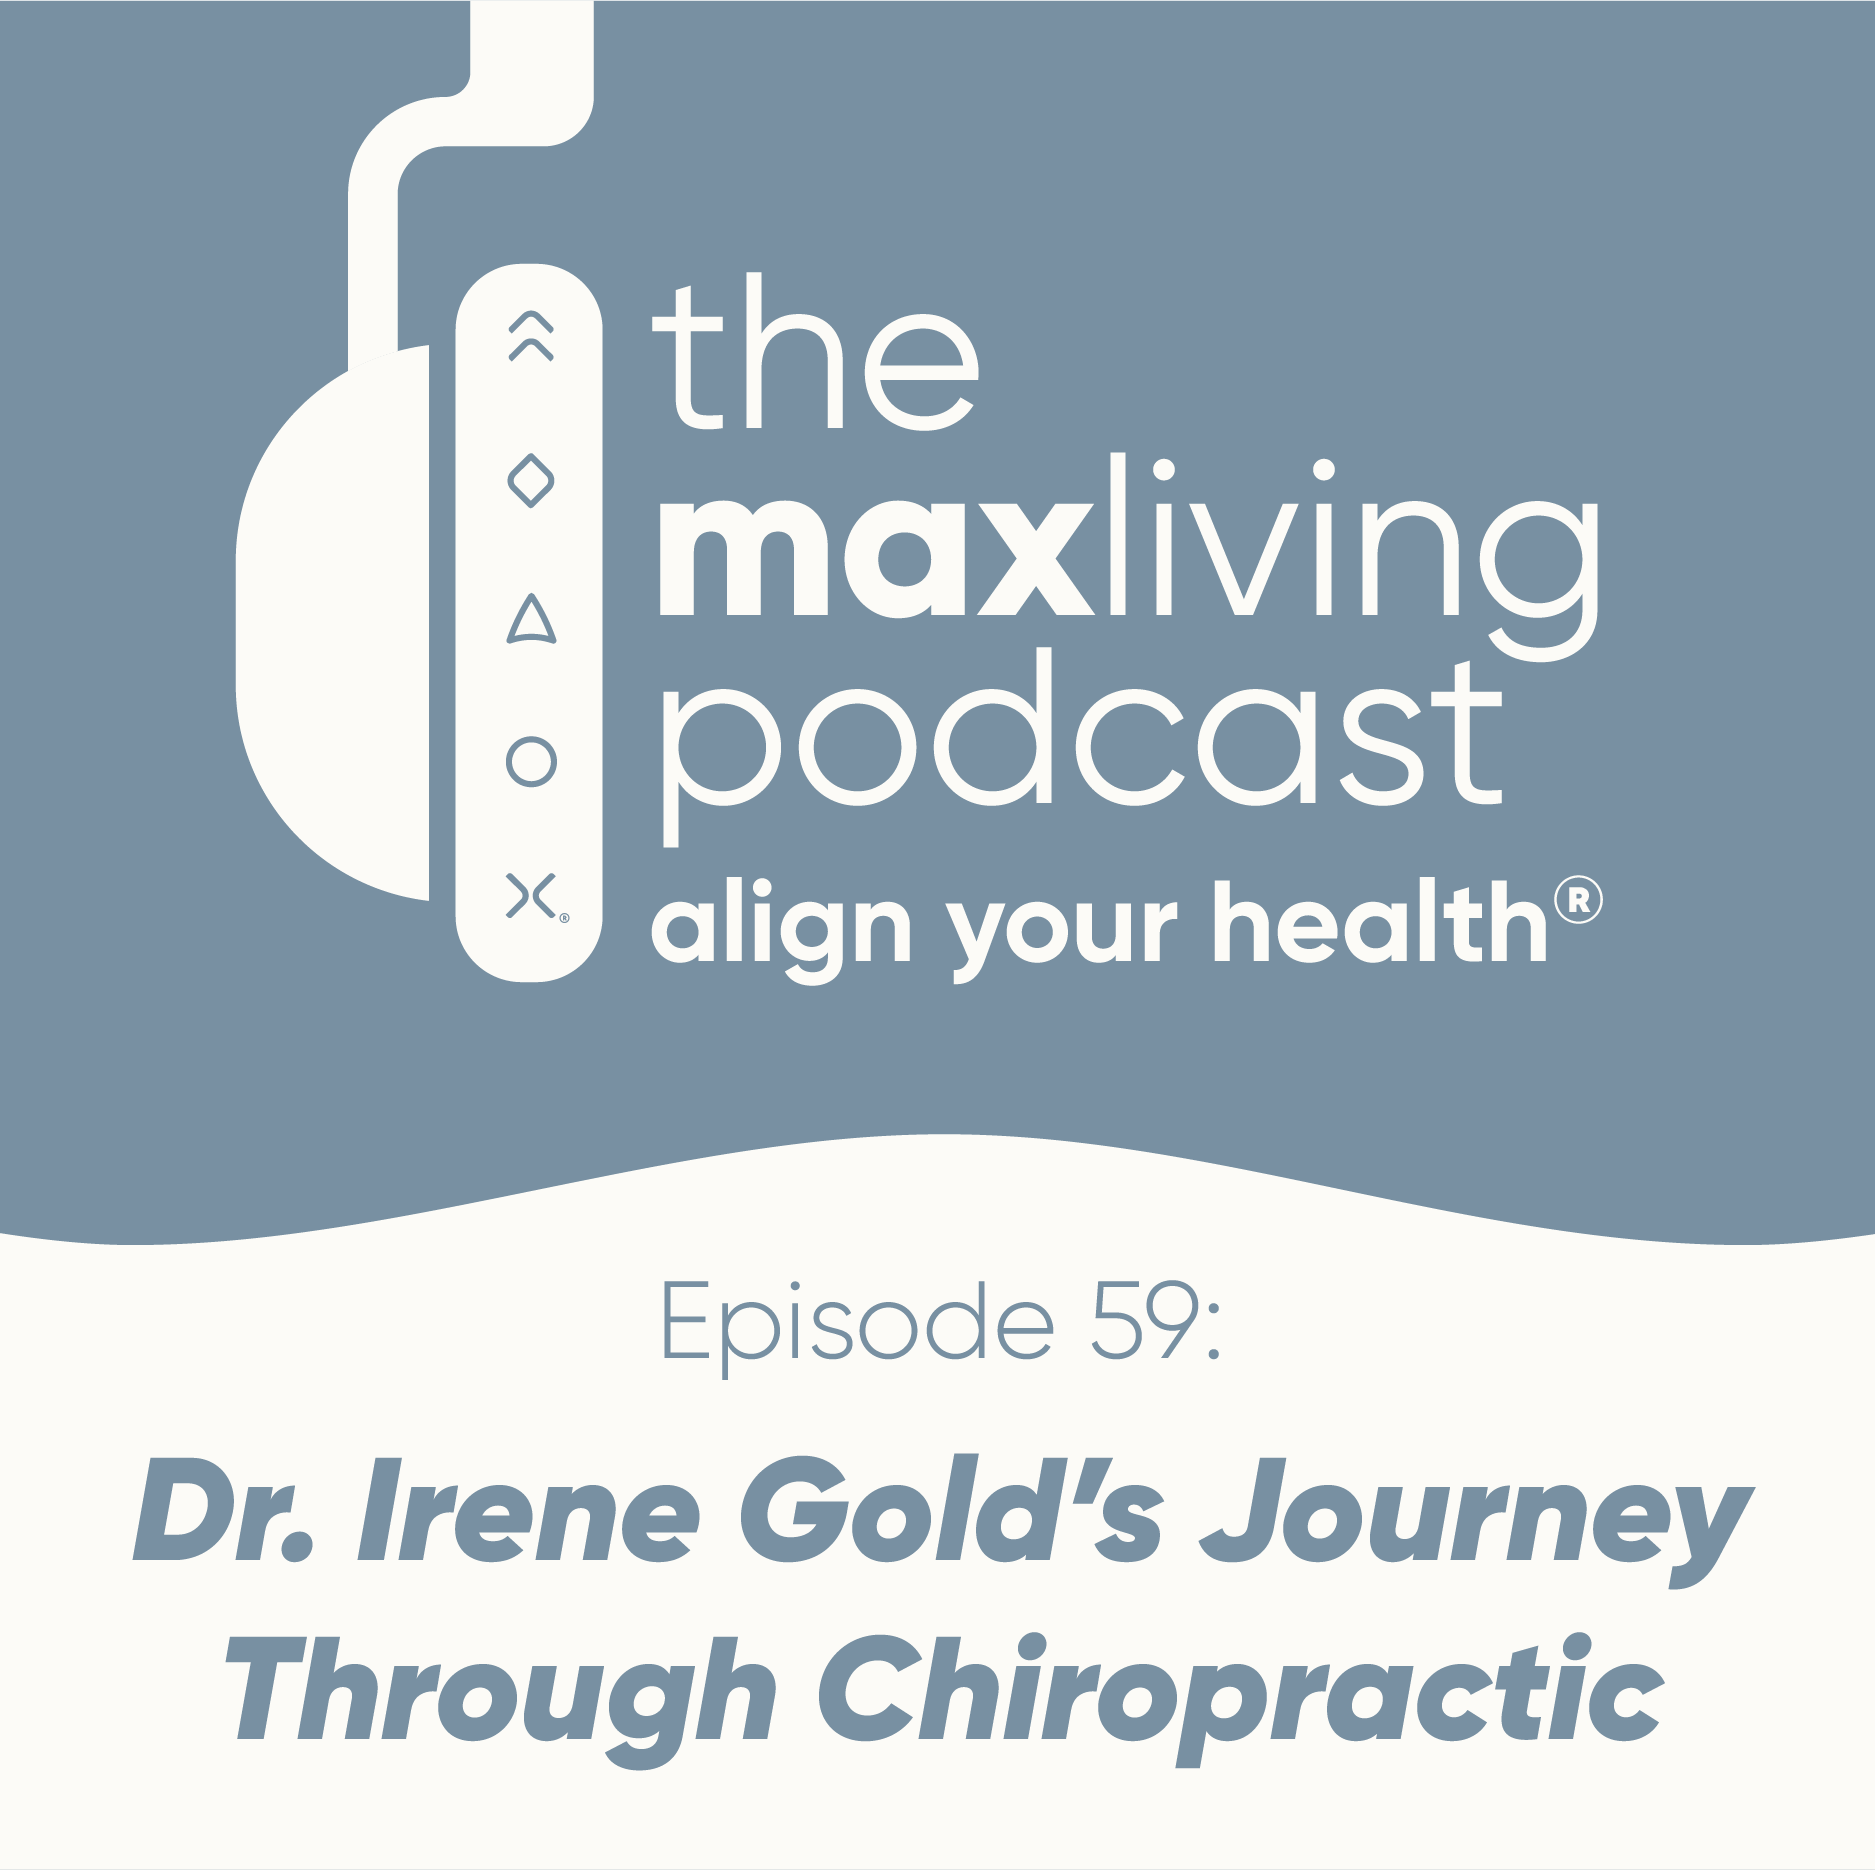 Dr. Irene Gold's Journey Through Chiropractic